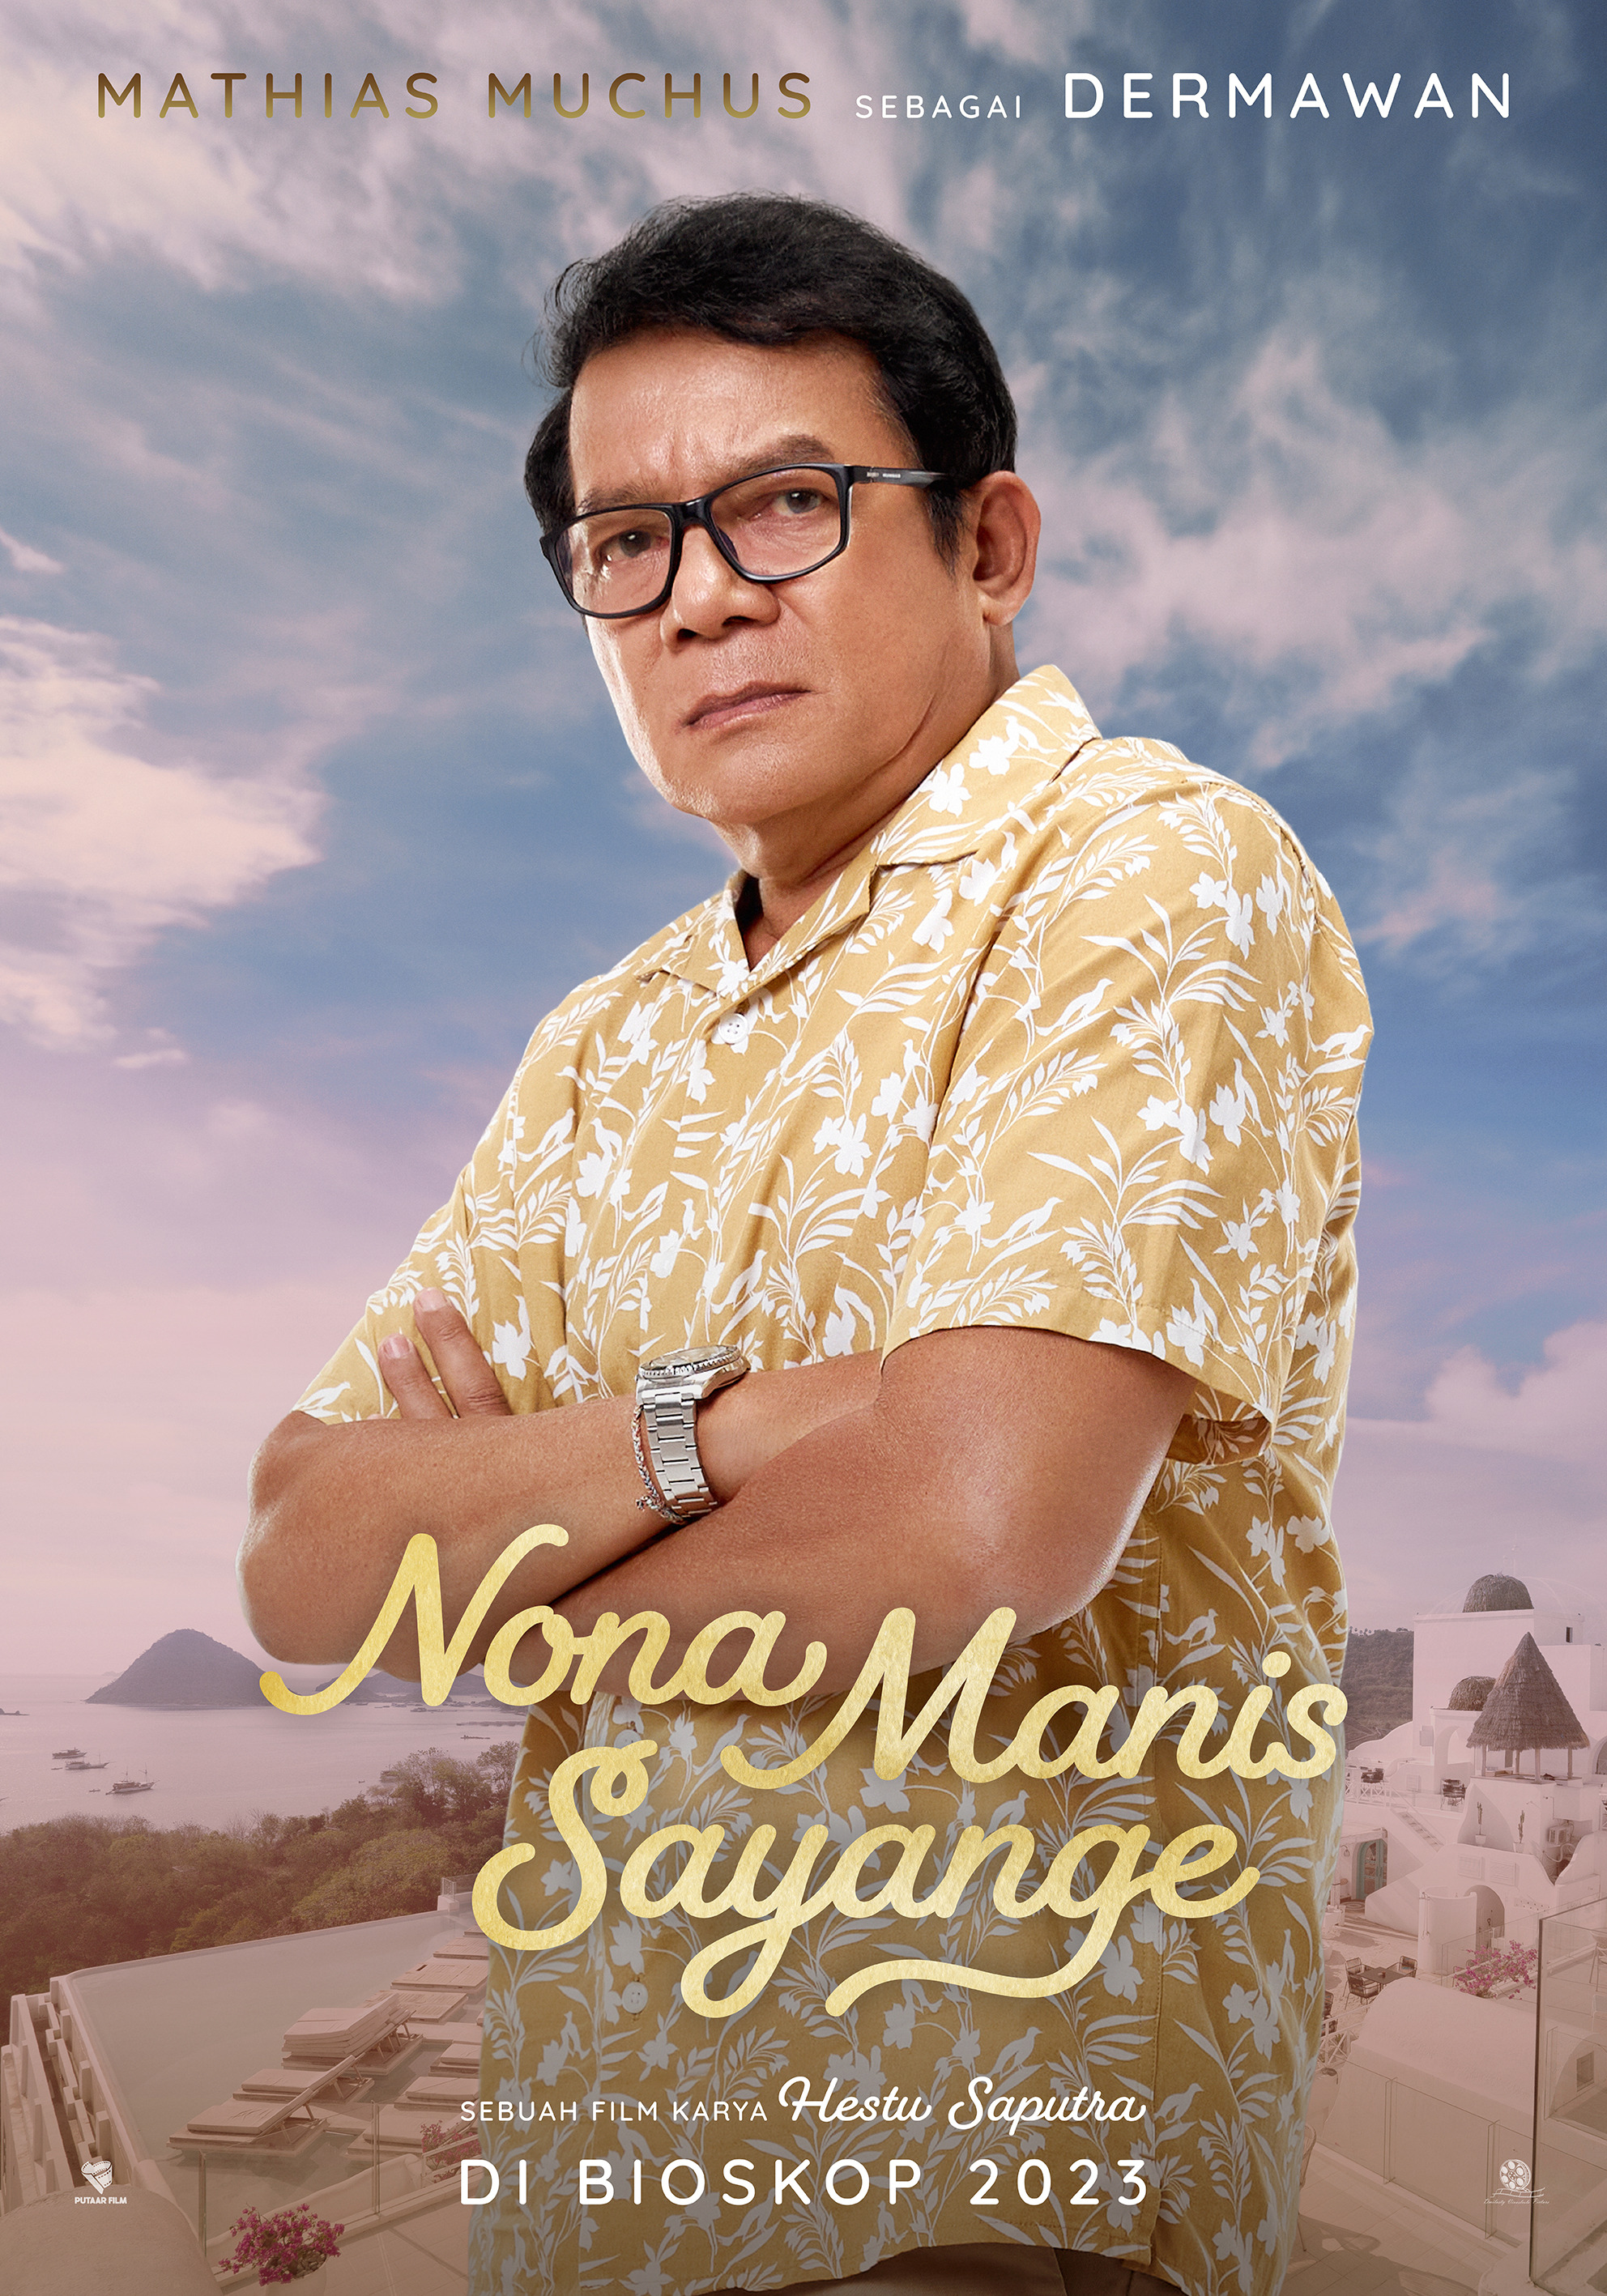 Mega Sized Movie Poster Image for Nona Manis Sayange (#5 of 6)